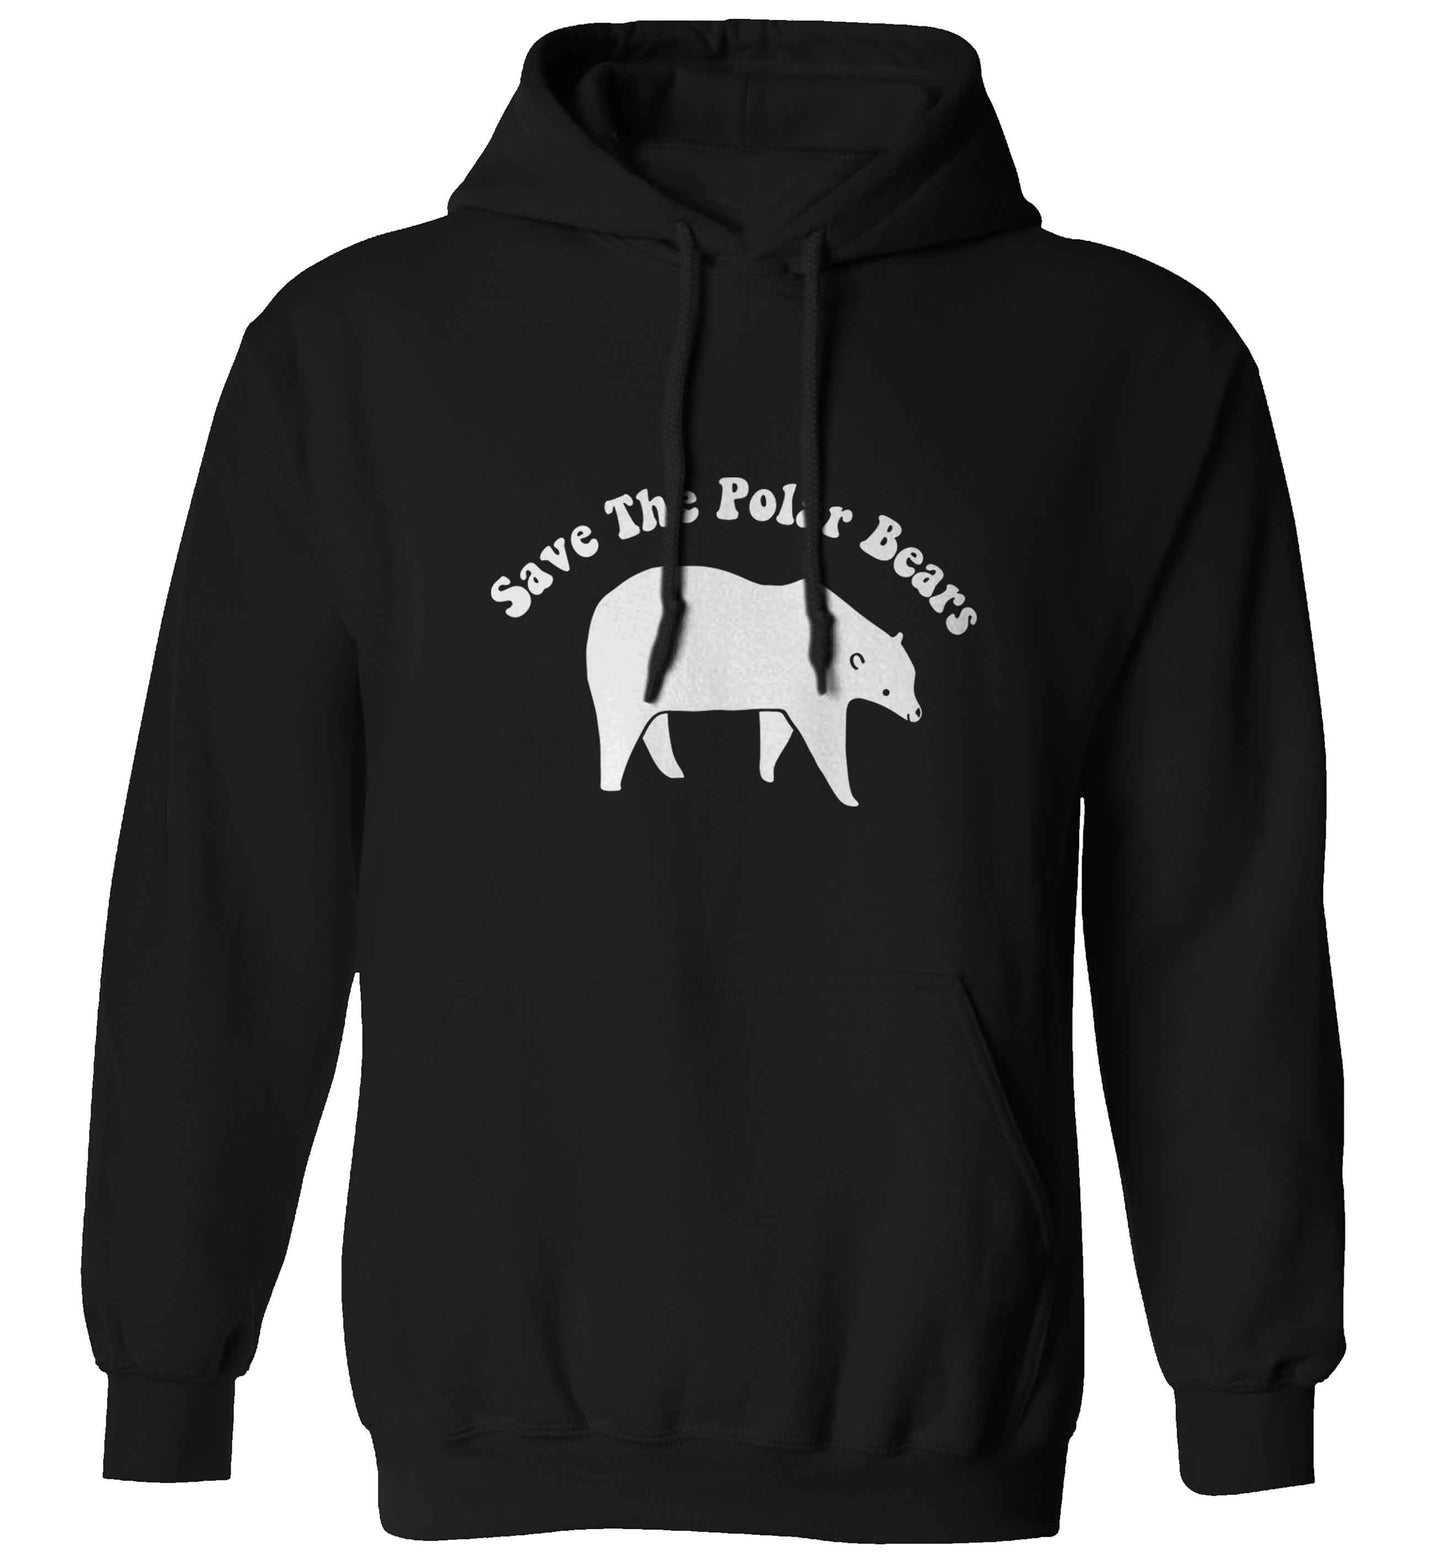 Save The Polar Bears adults unisex black hoodie 2XL